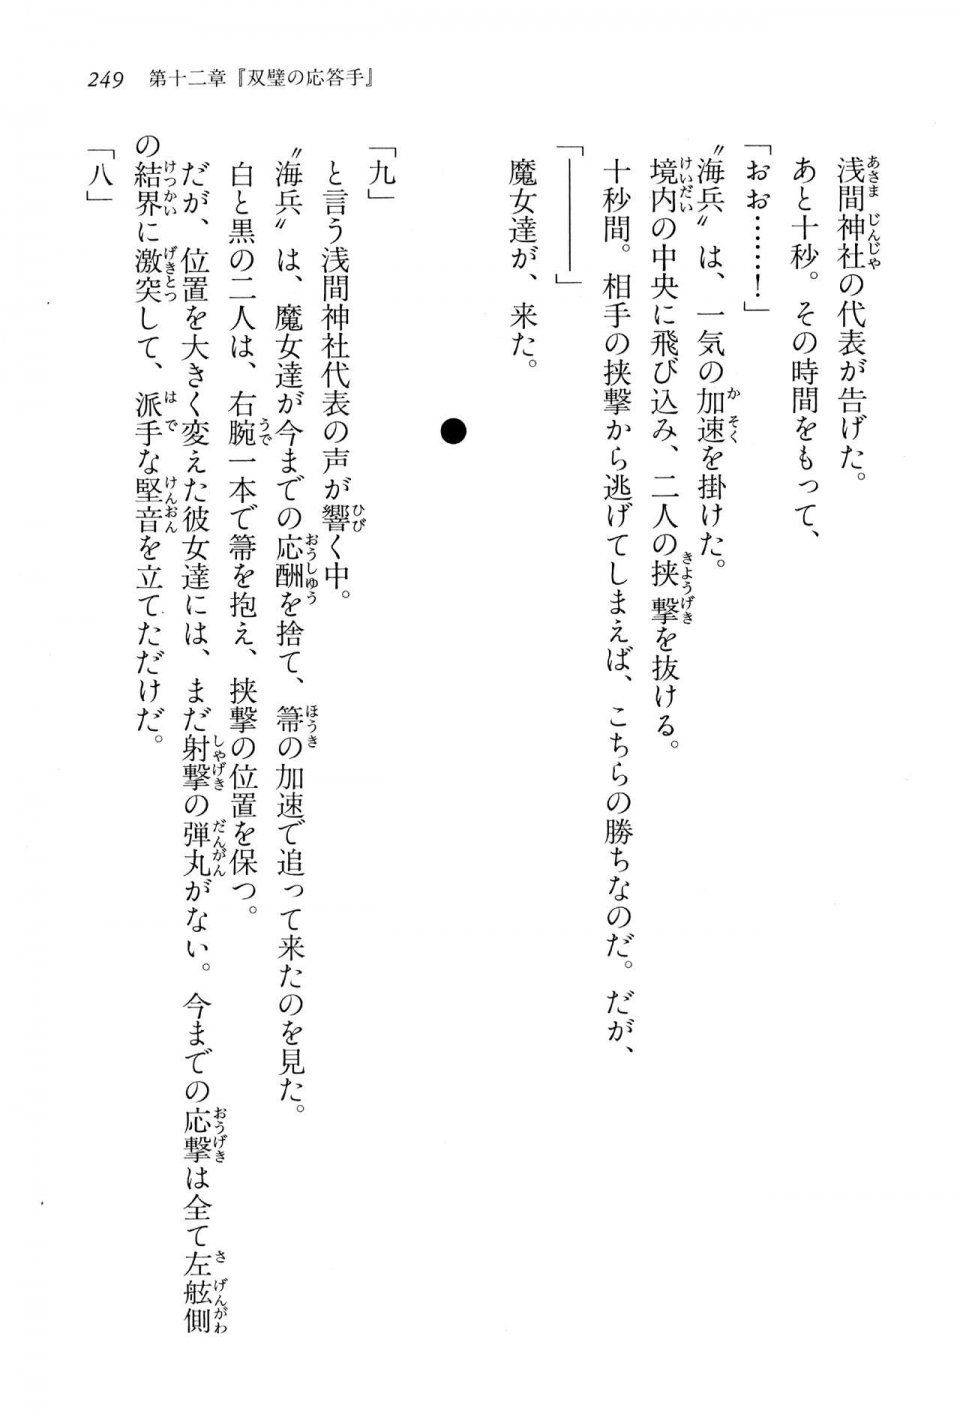 Kyoukai Senjou no Horizon BD Special Mininovel Vol 6(3B) - Photo #253